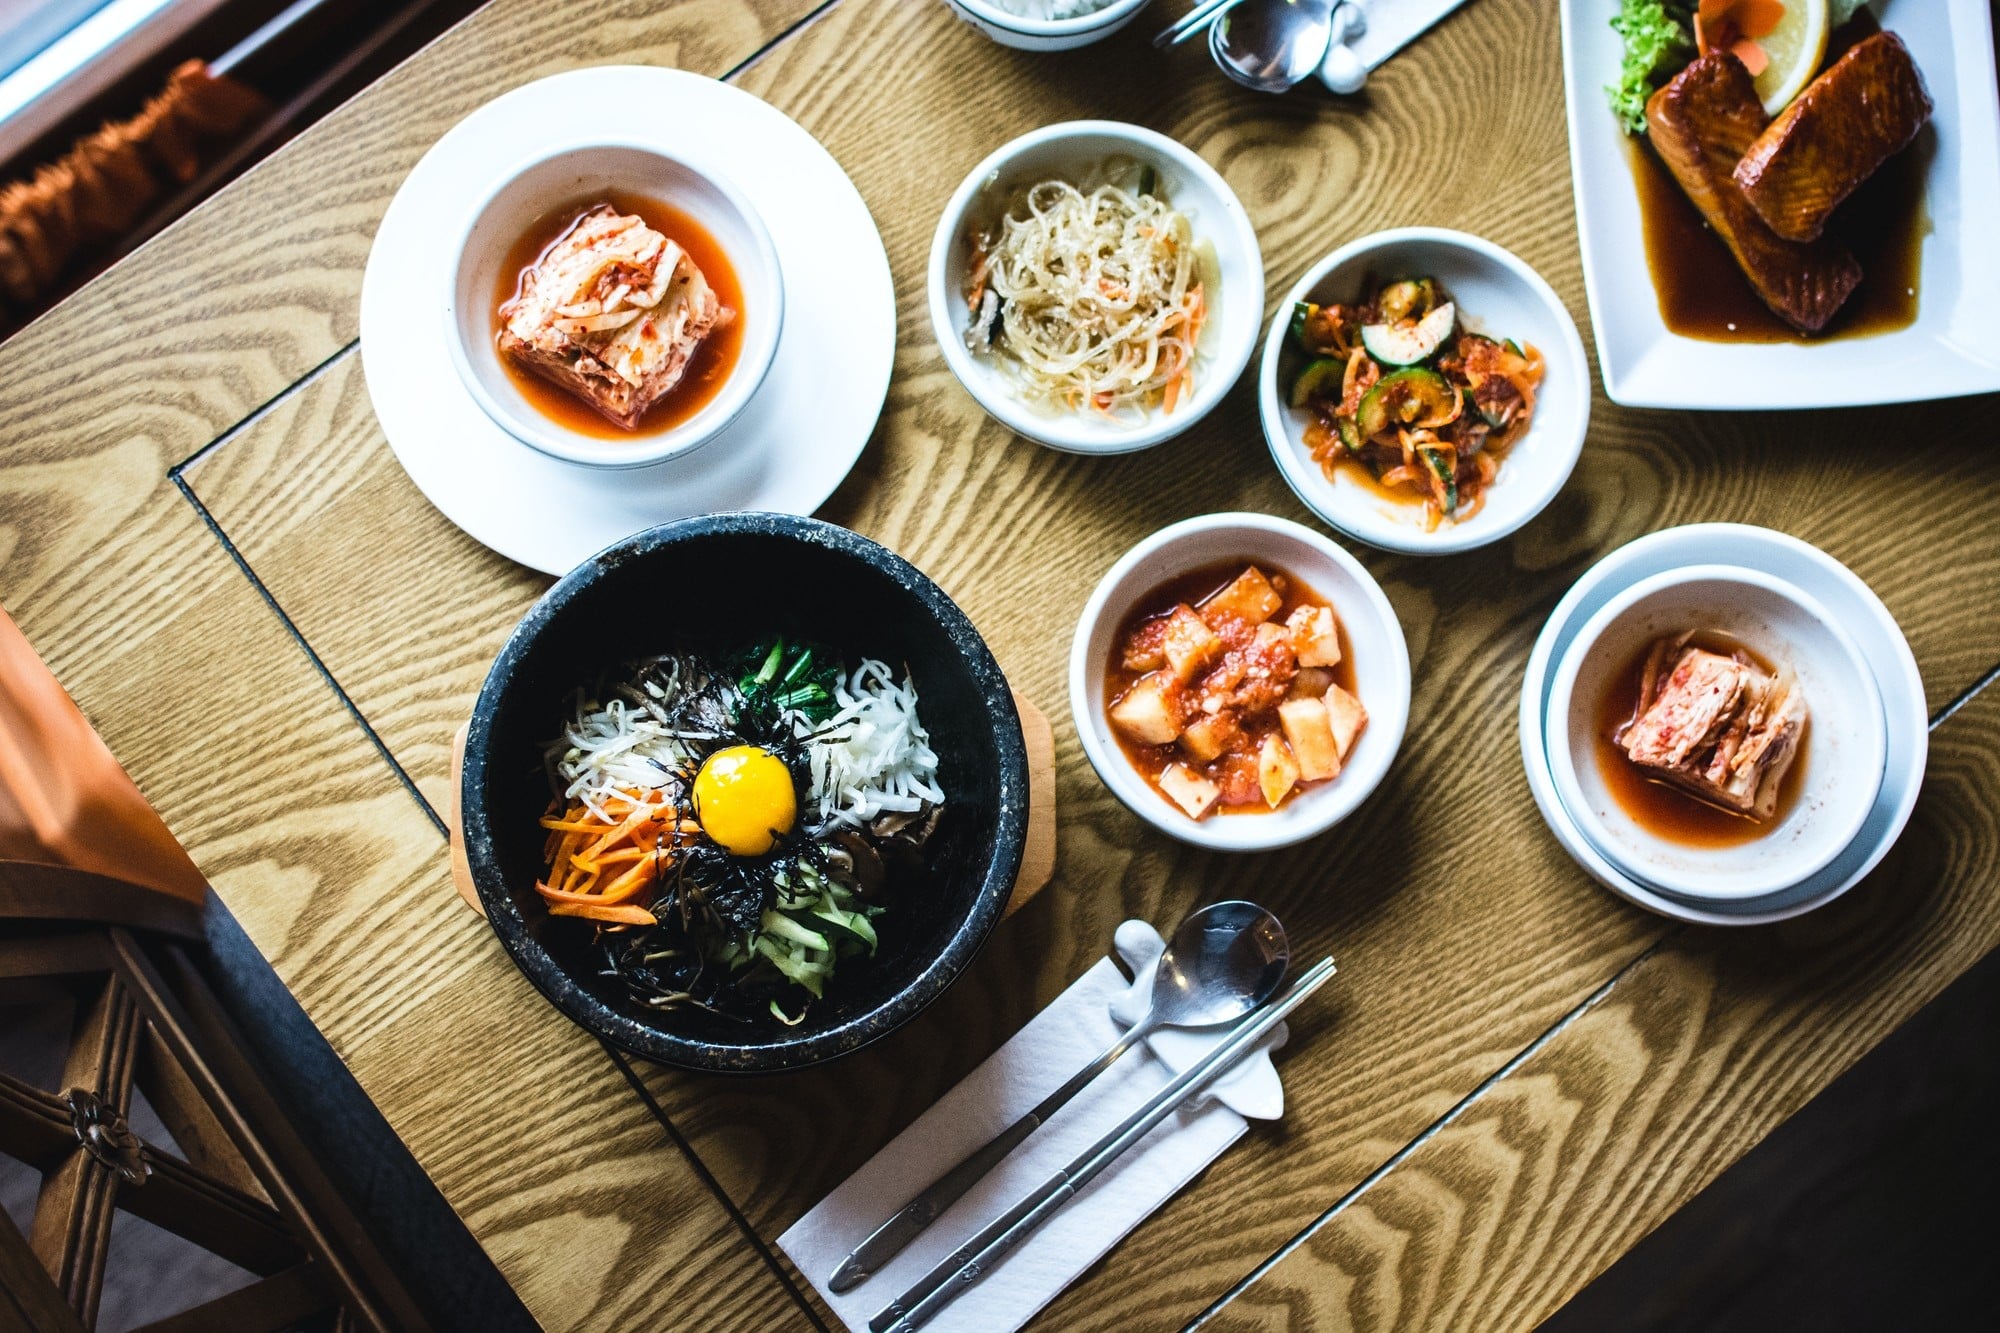 http://momokoreanrestaurant.net/__static/a1677c45b6366b93cd17439de3881321/images-unsplash-com.jpeg